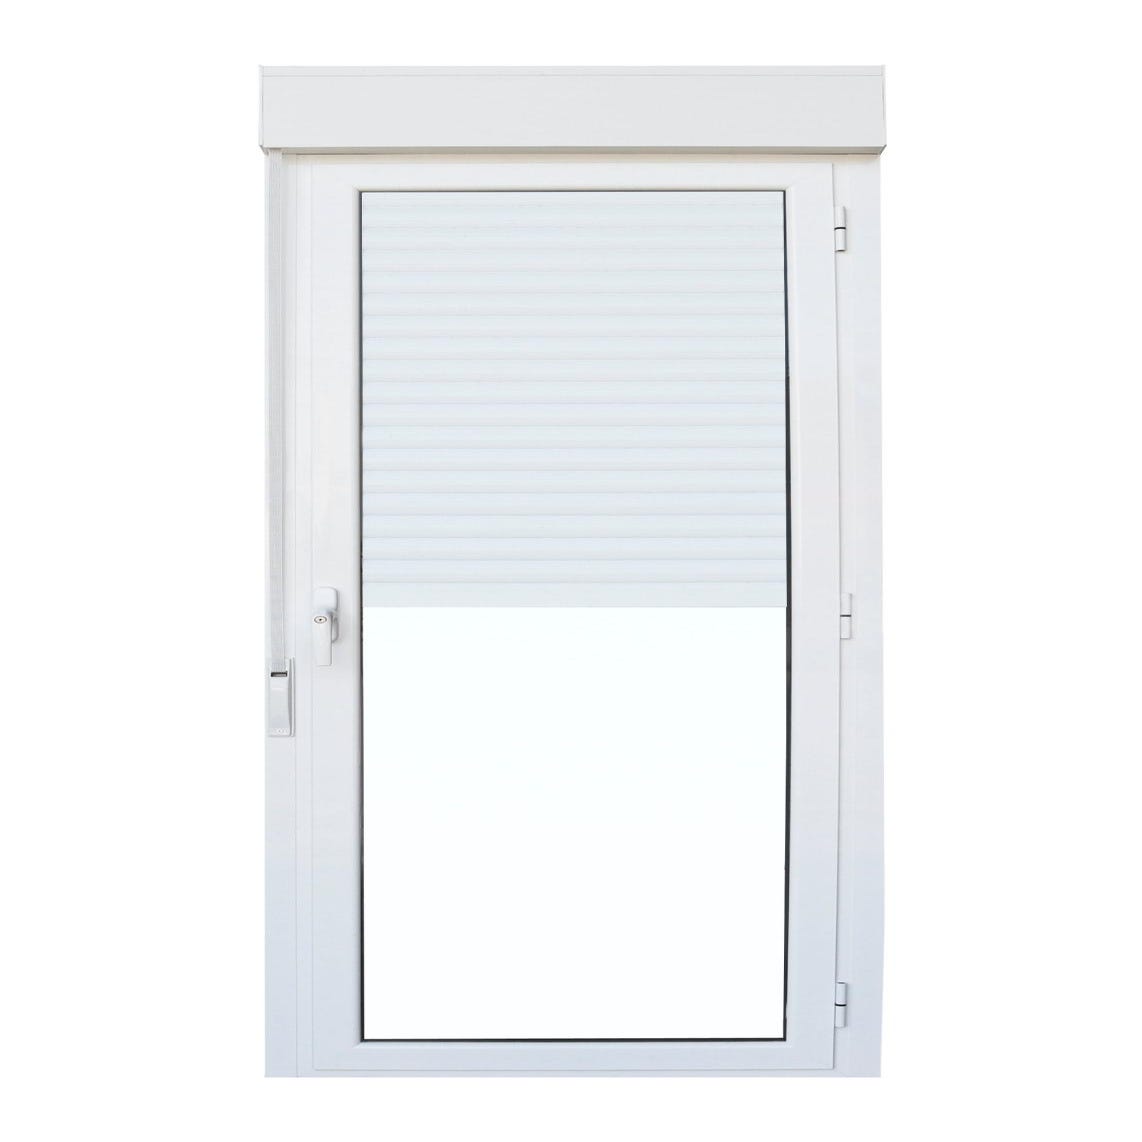 Balconera PVC ARTENS blanca oscilobatiente con persiana de 120x229